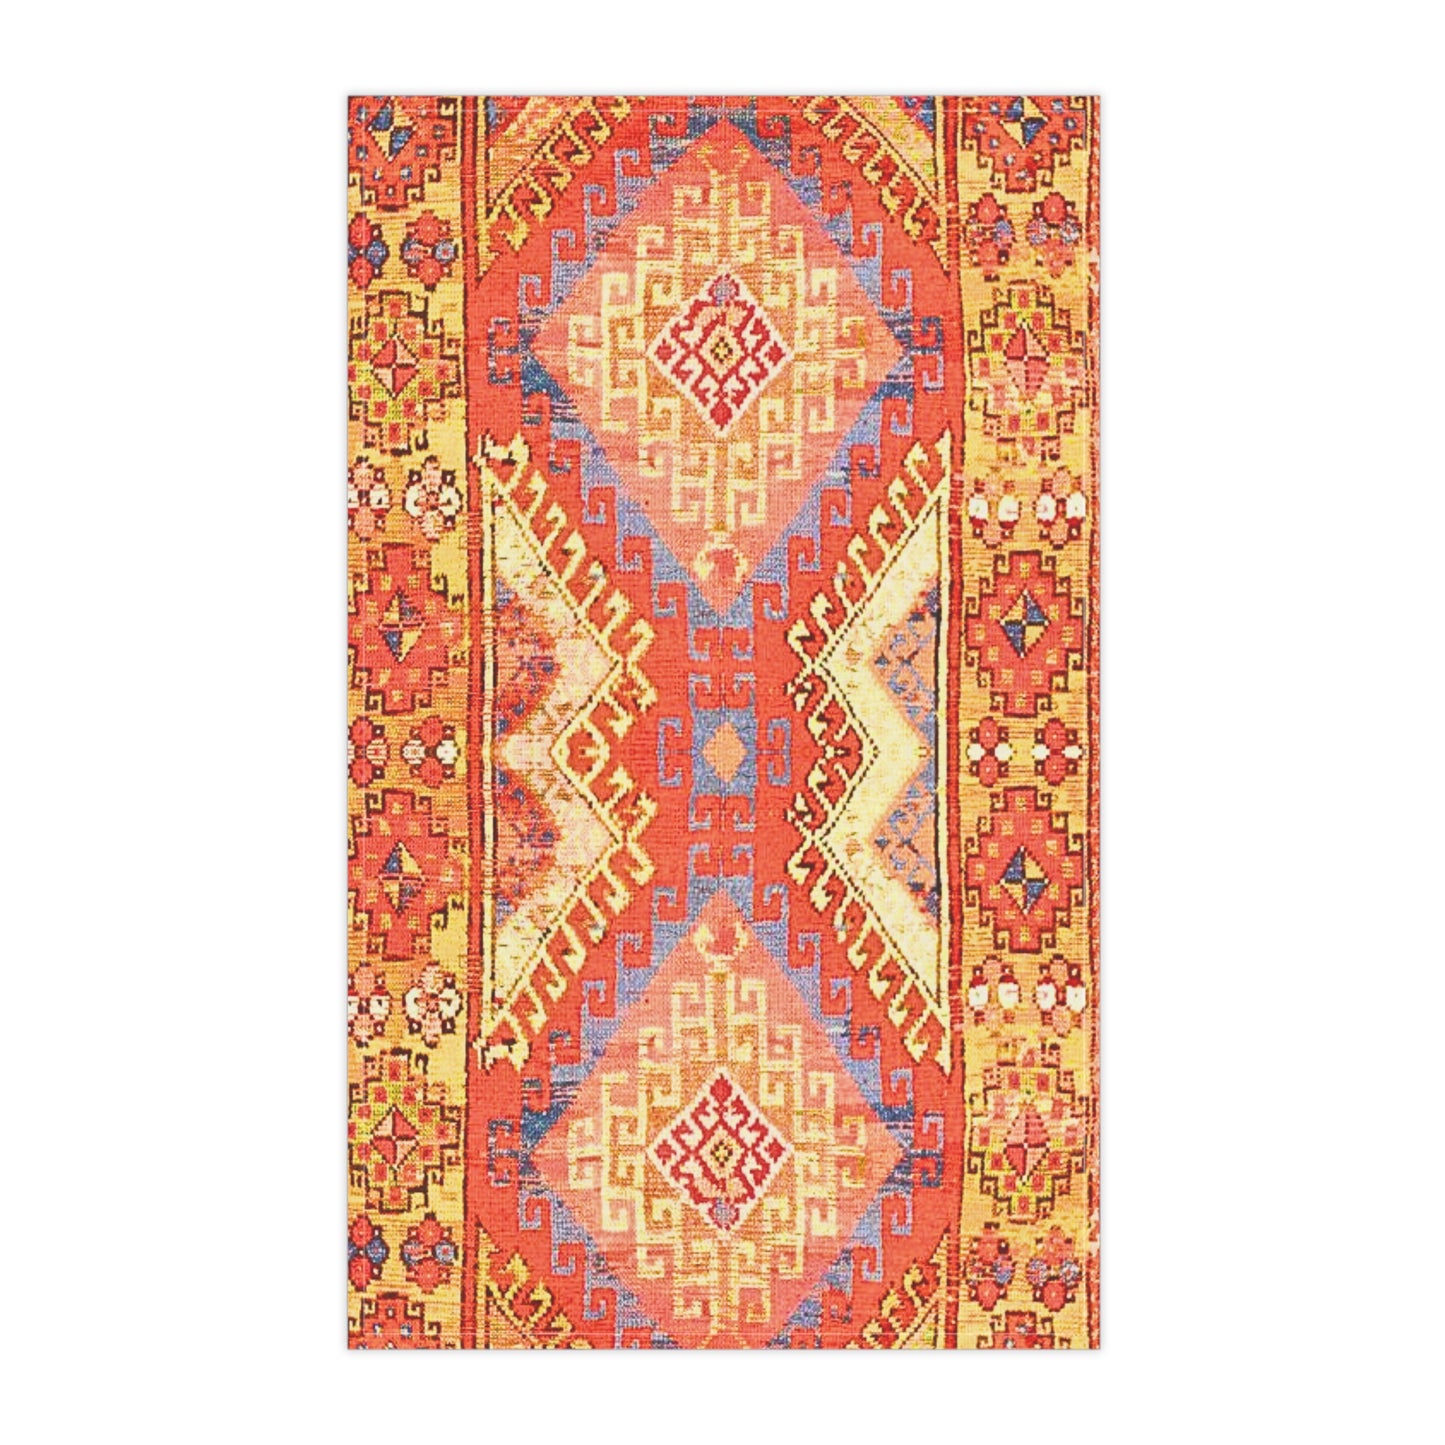 Berber Tribal Rug Pattern Orange Decorative Kitchen Tea Towel/Bar Towel